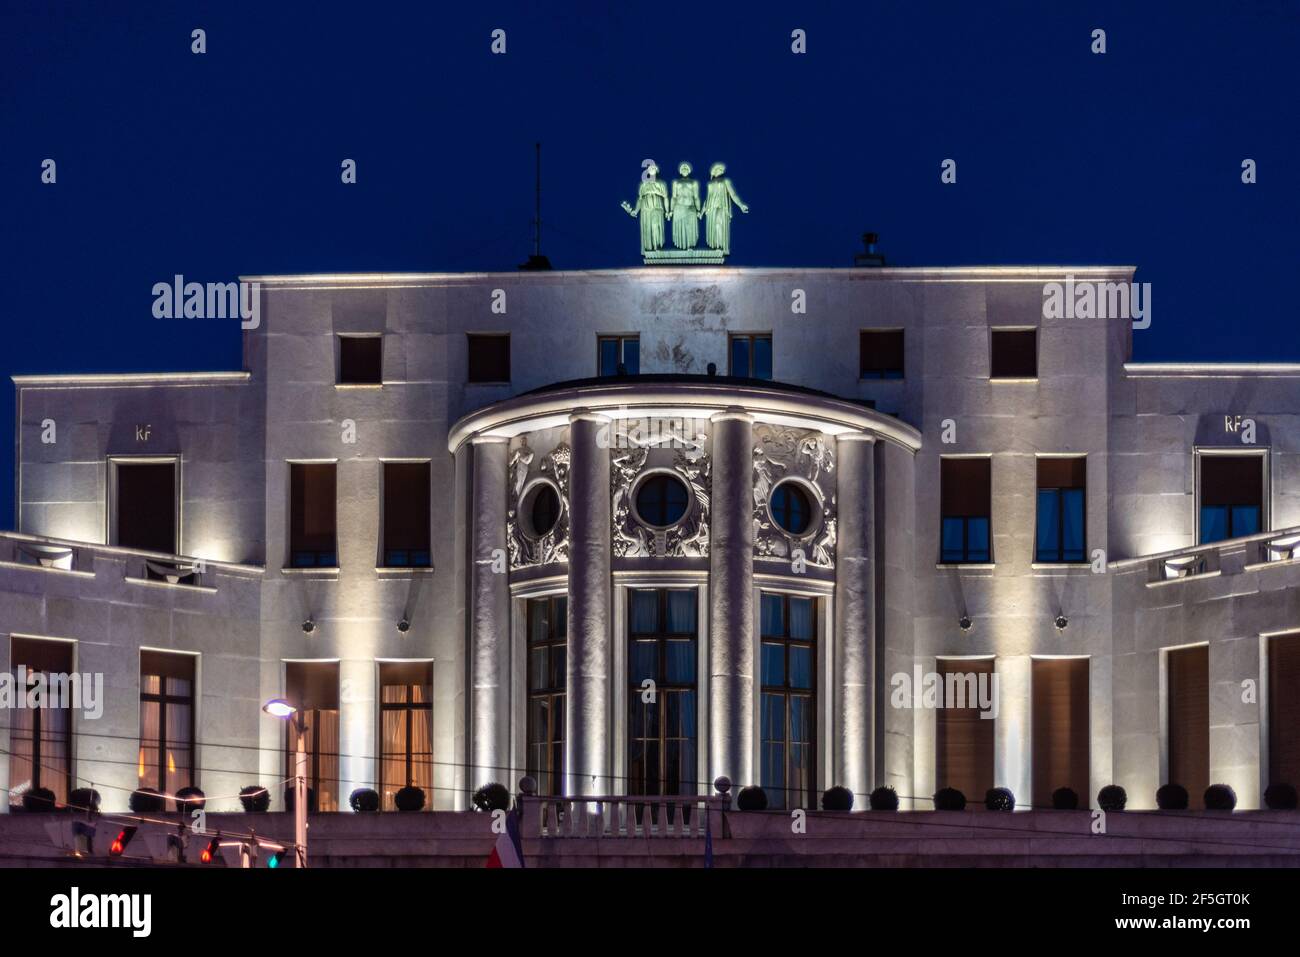 Belgrade, Serbia - March 25, 2021: Embassy of France in Belgrade, Serbia at night Stock Photo